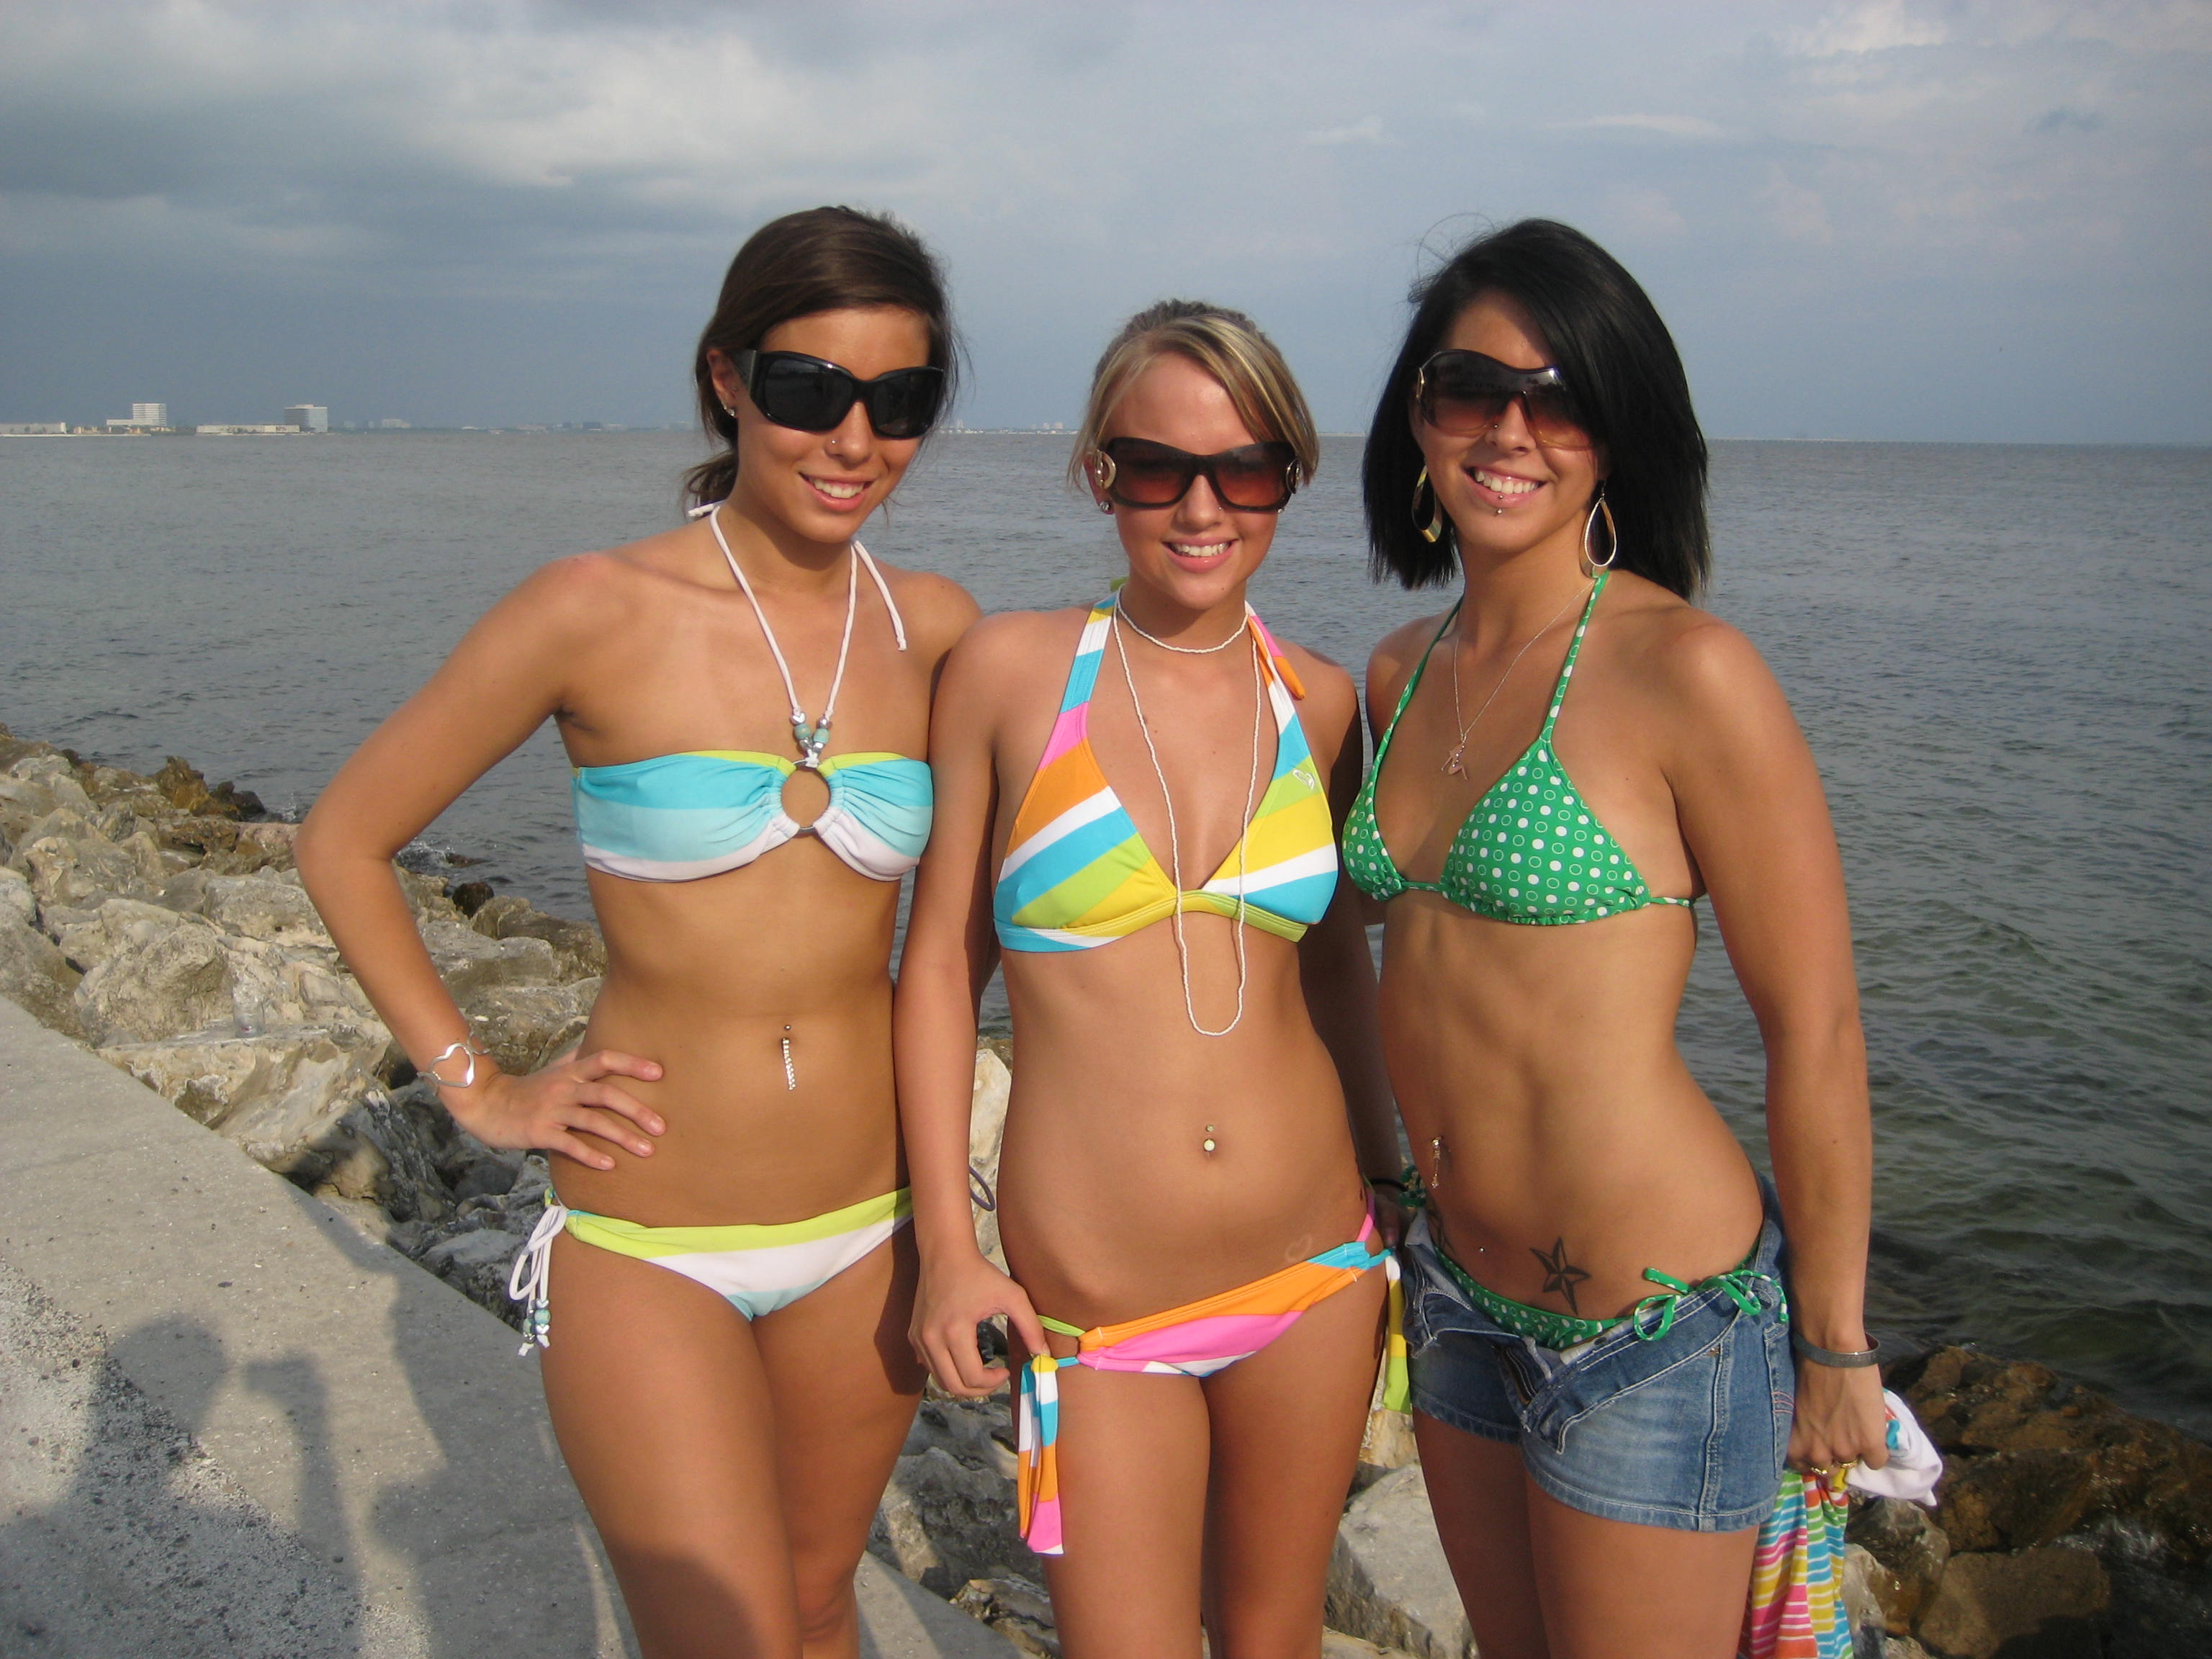 bikini flashing and nude sunbathing party girls